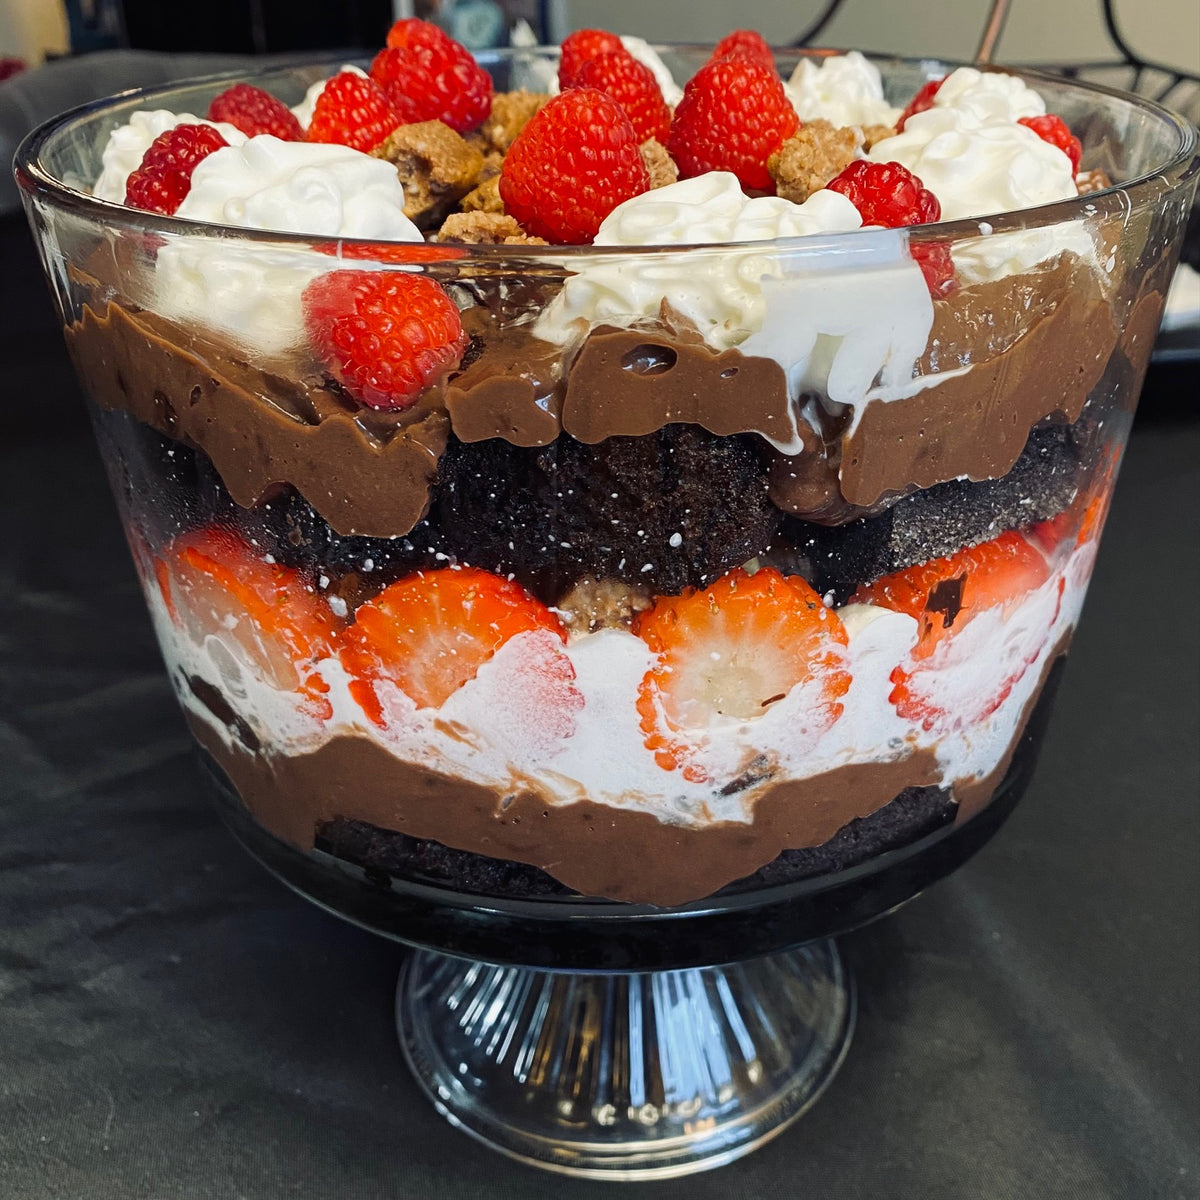 Chocolate Berry Trifle